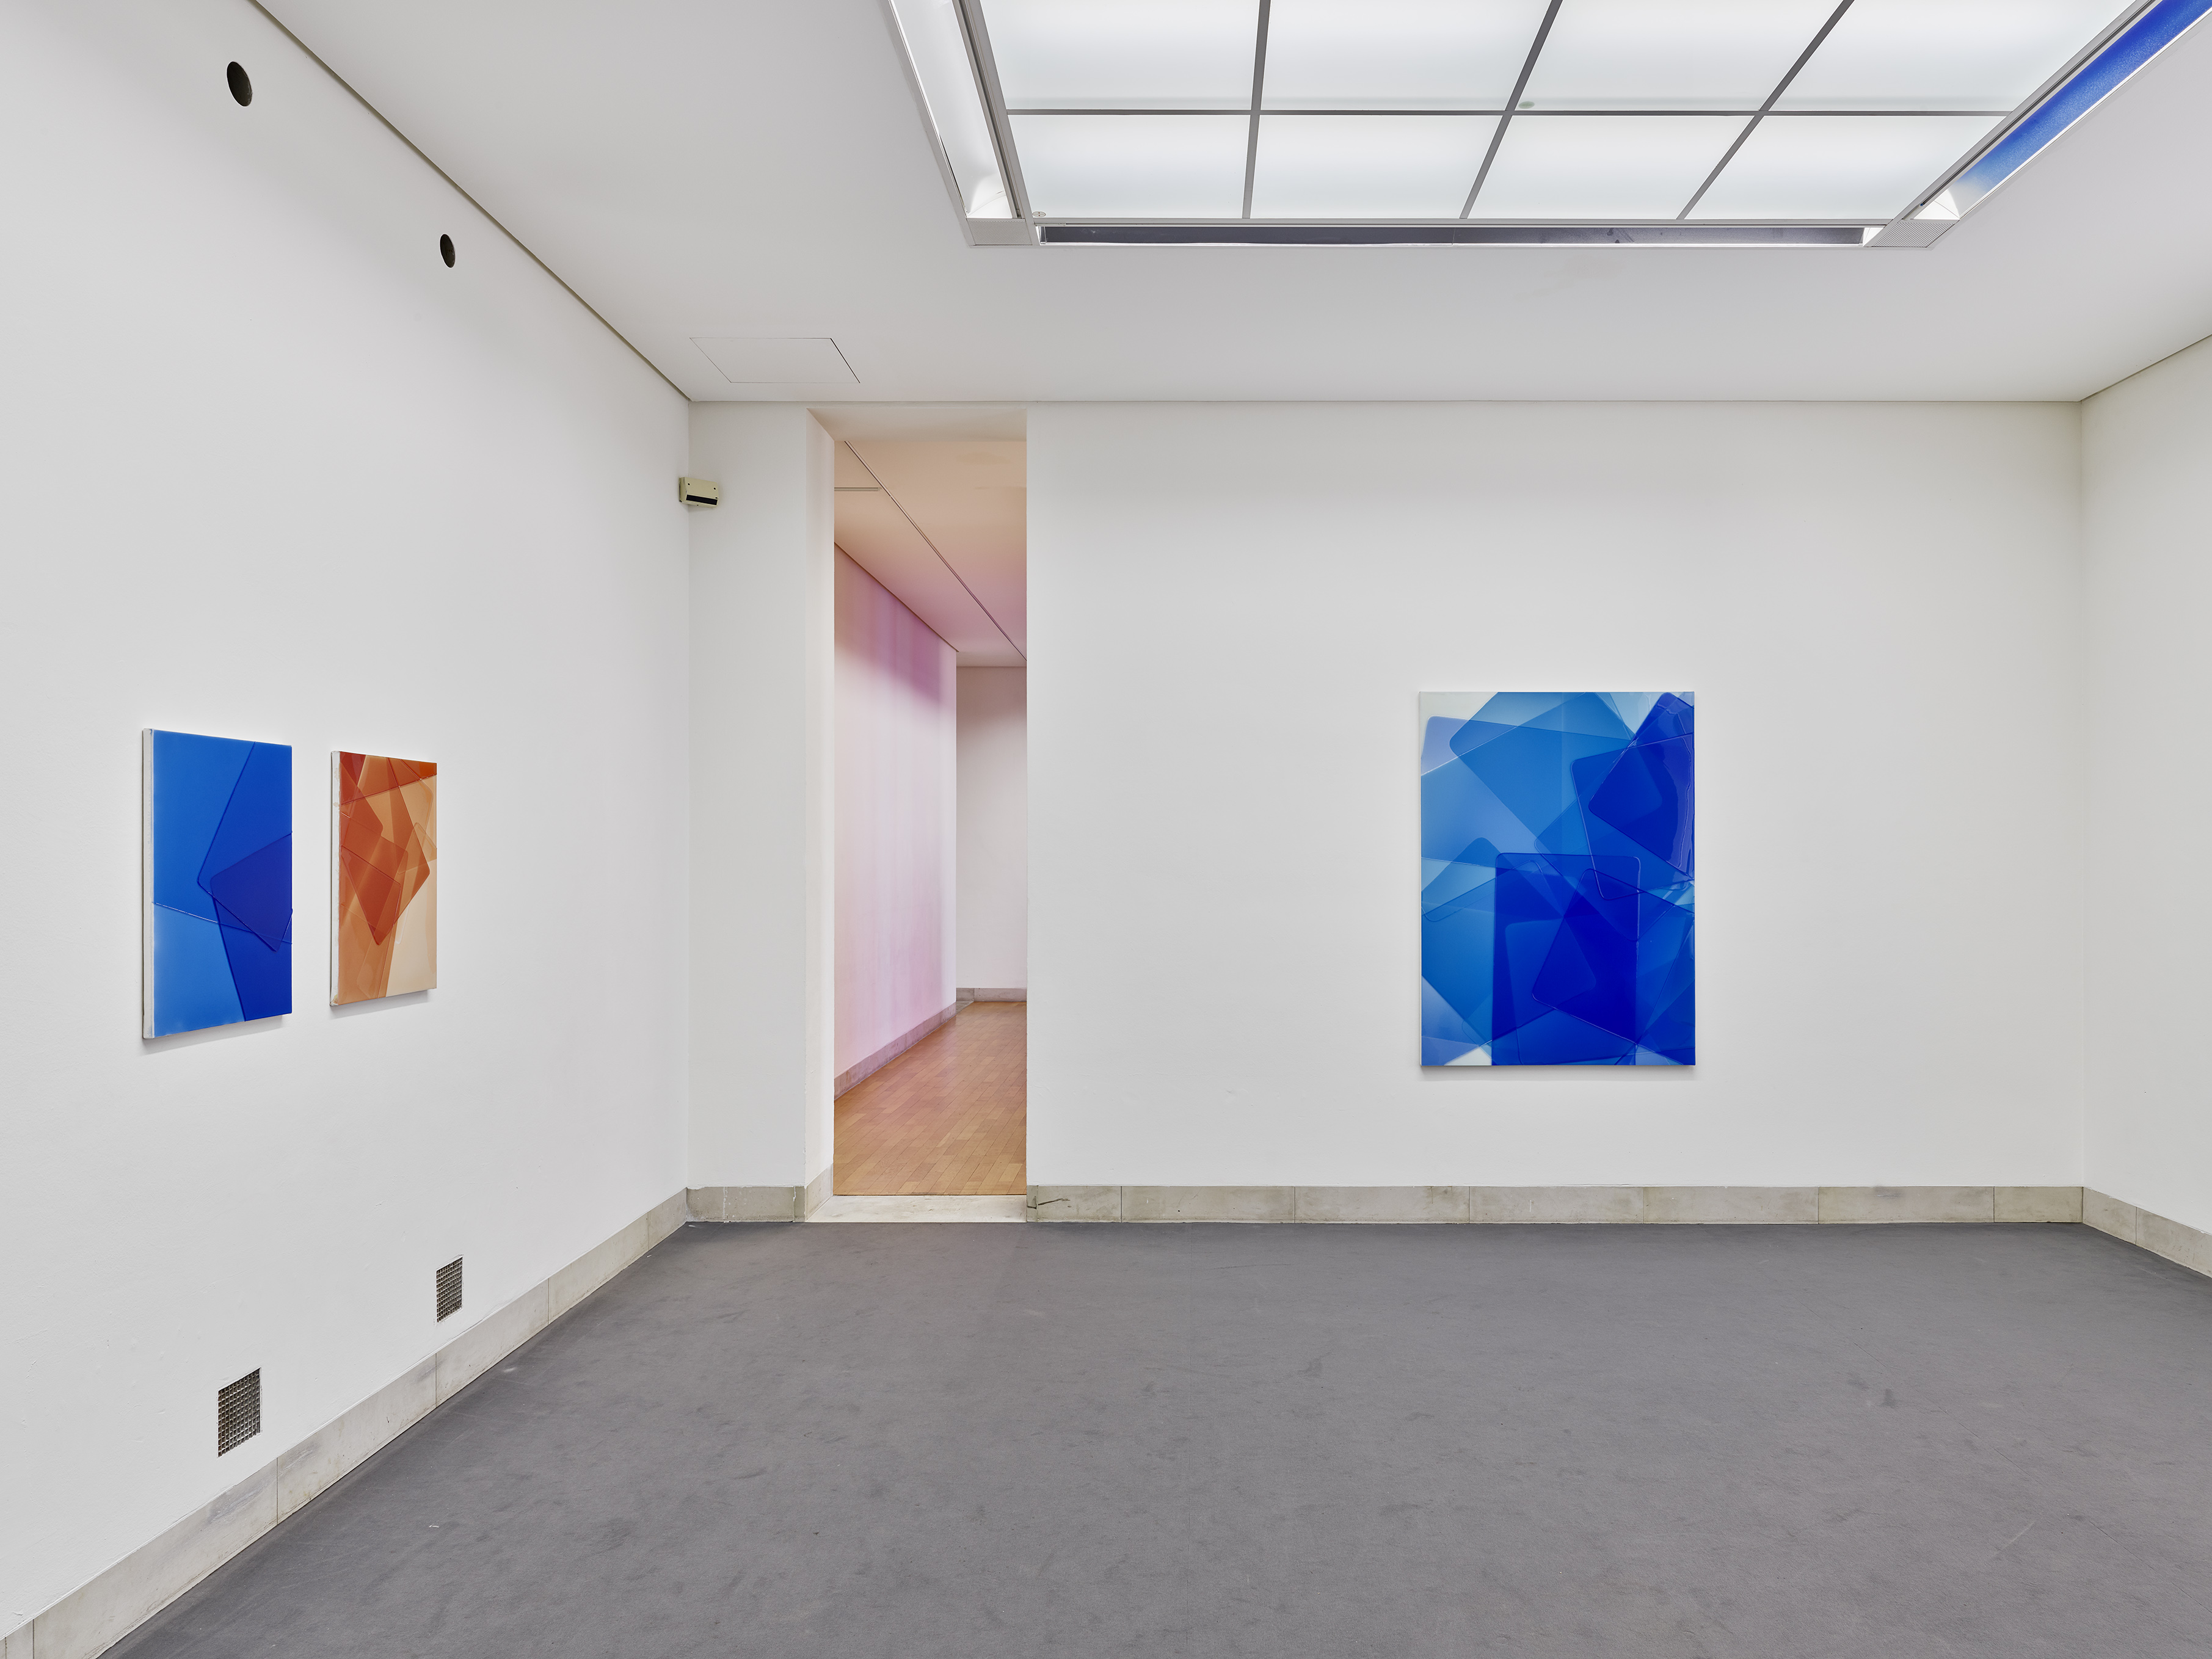 Ausstellungsansicht paint it, Peter Zimmermann, Treppenhaus, 2019, © VG Bild-Kunst, Bonn 2019, Foto: Bernhard Strauss